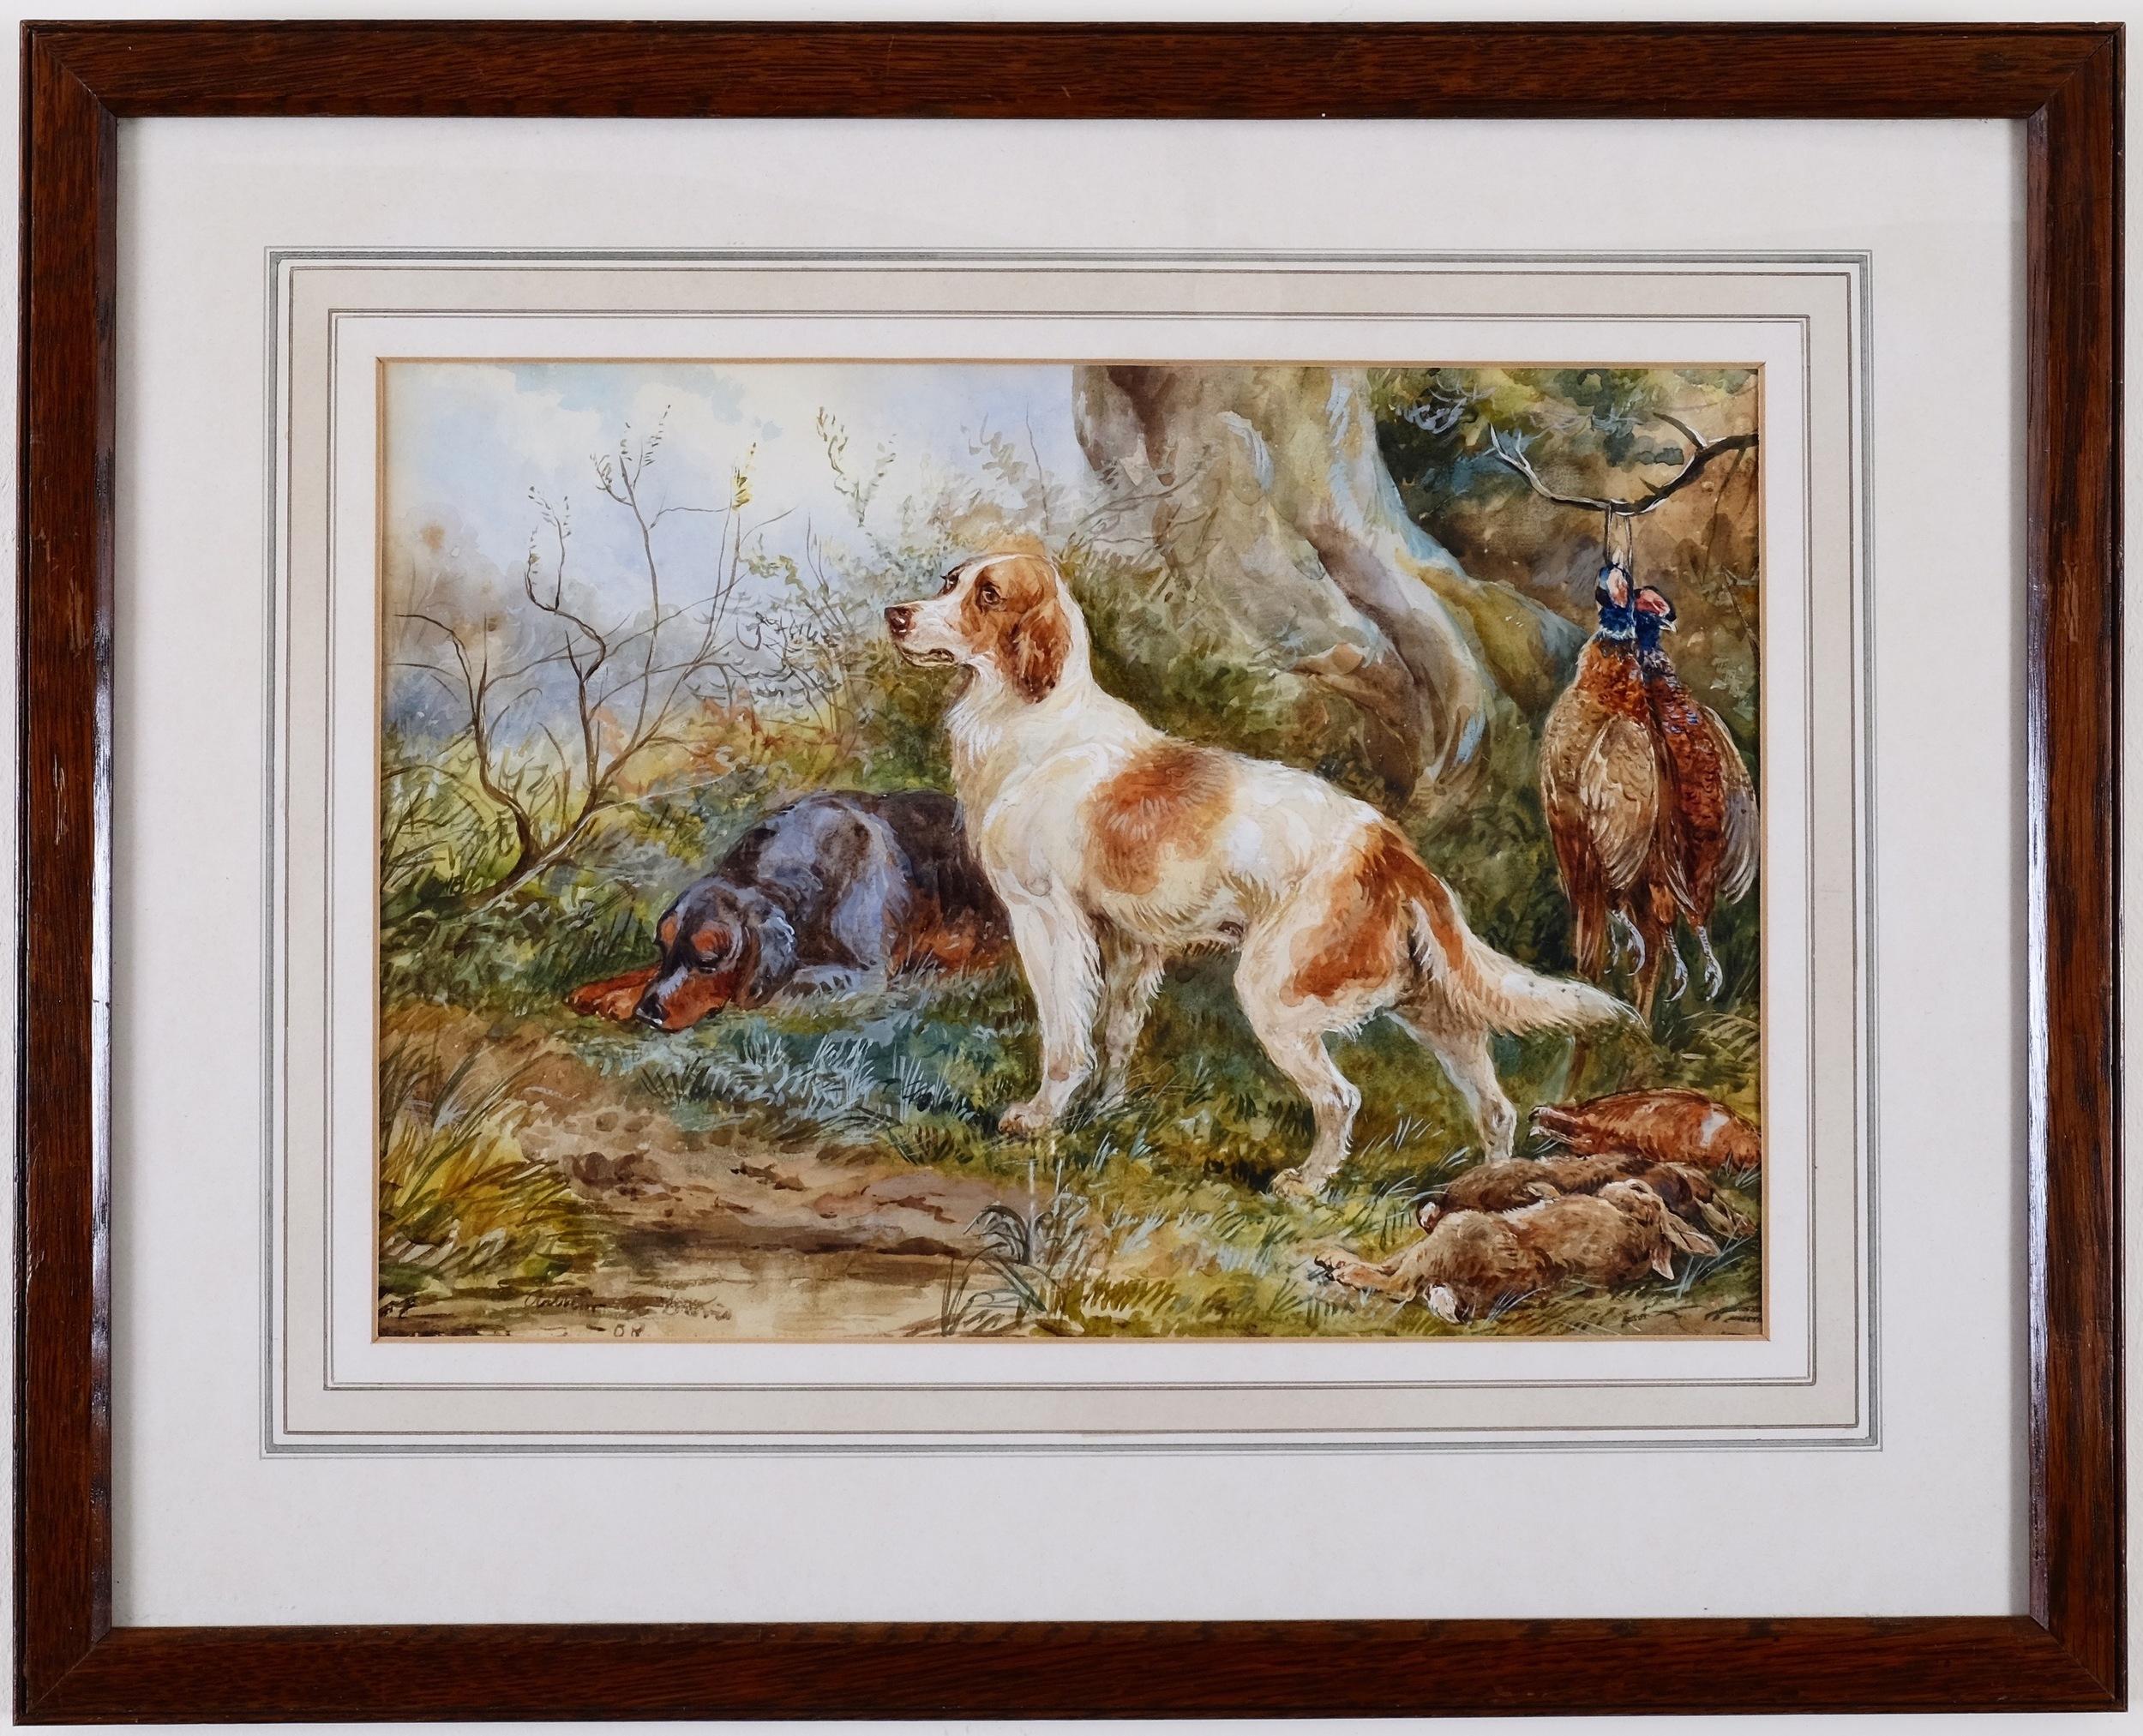 Animal Painting Arthur Alfred Davis - Arthur A Davis, (britannique fl 1877-1905)  "Resting" 